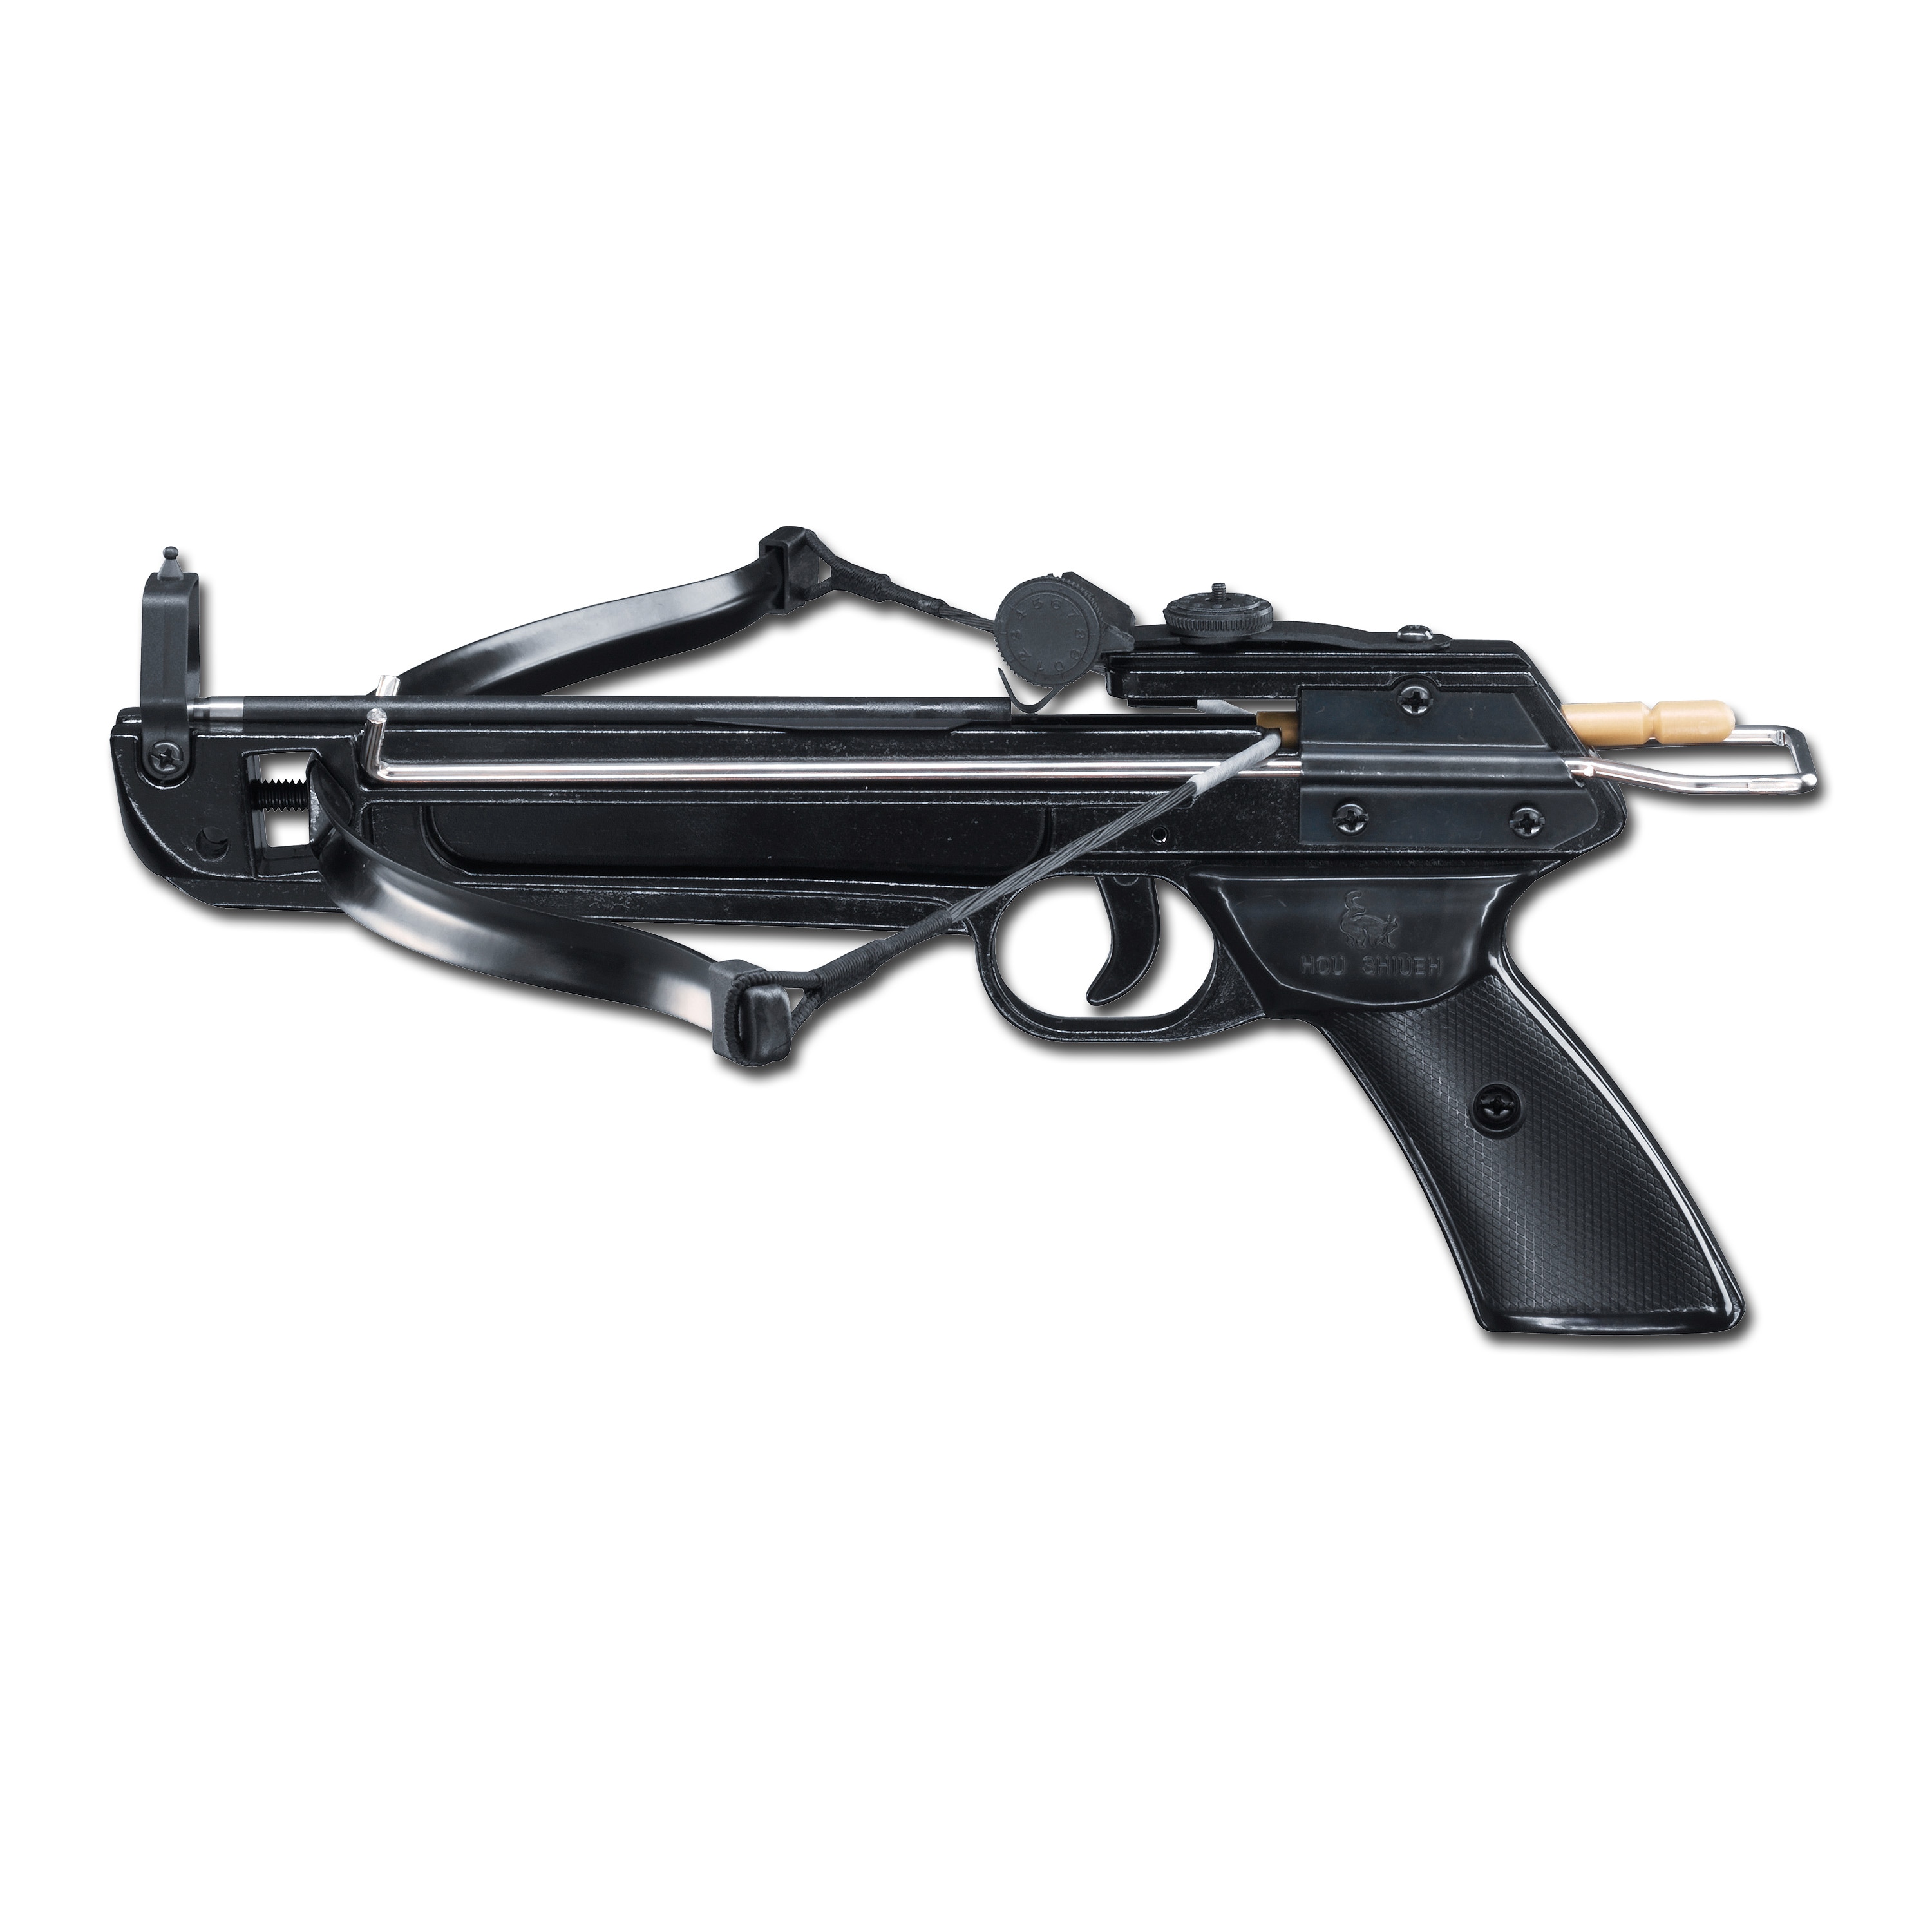 Pistol Crossbow Umarex Mod. CF 105, Pistol Crossbow Umarex Mod. CF 105, Crossbows, Archery